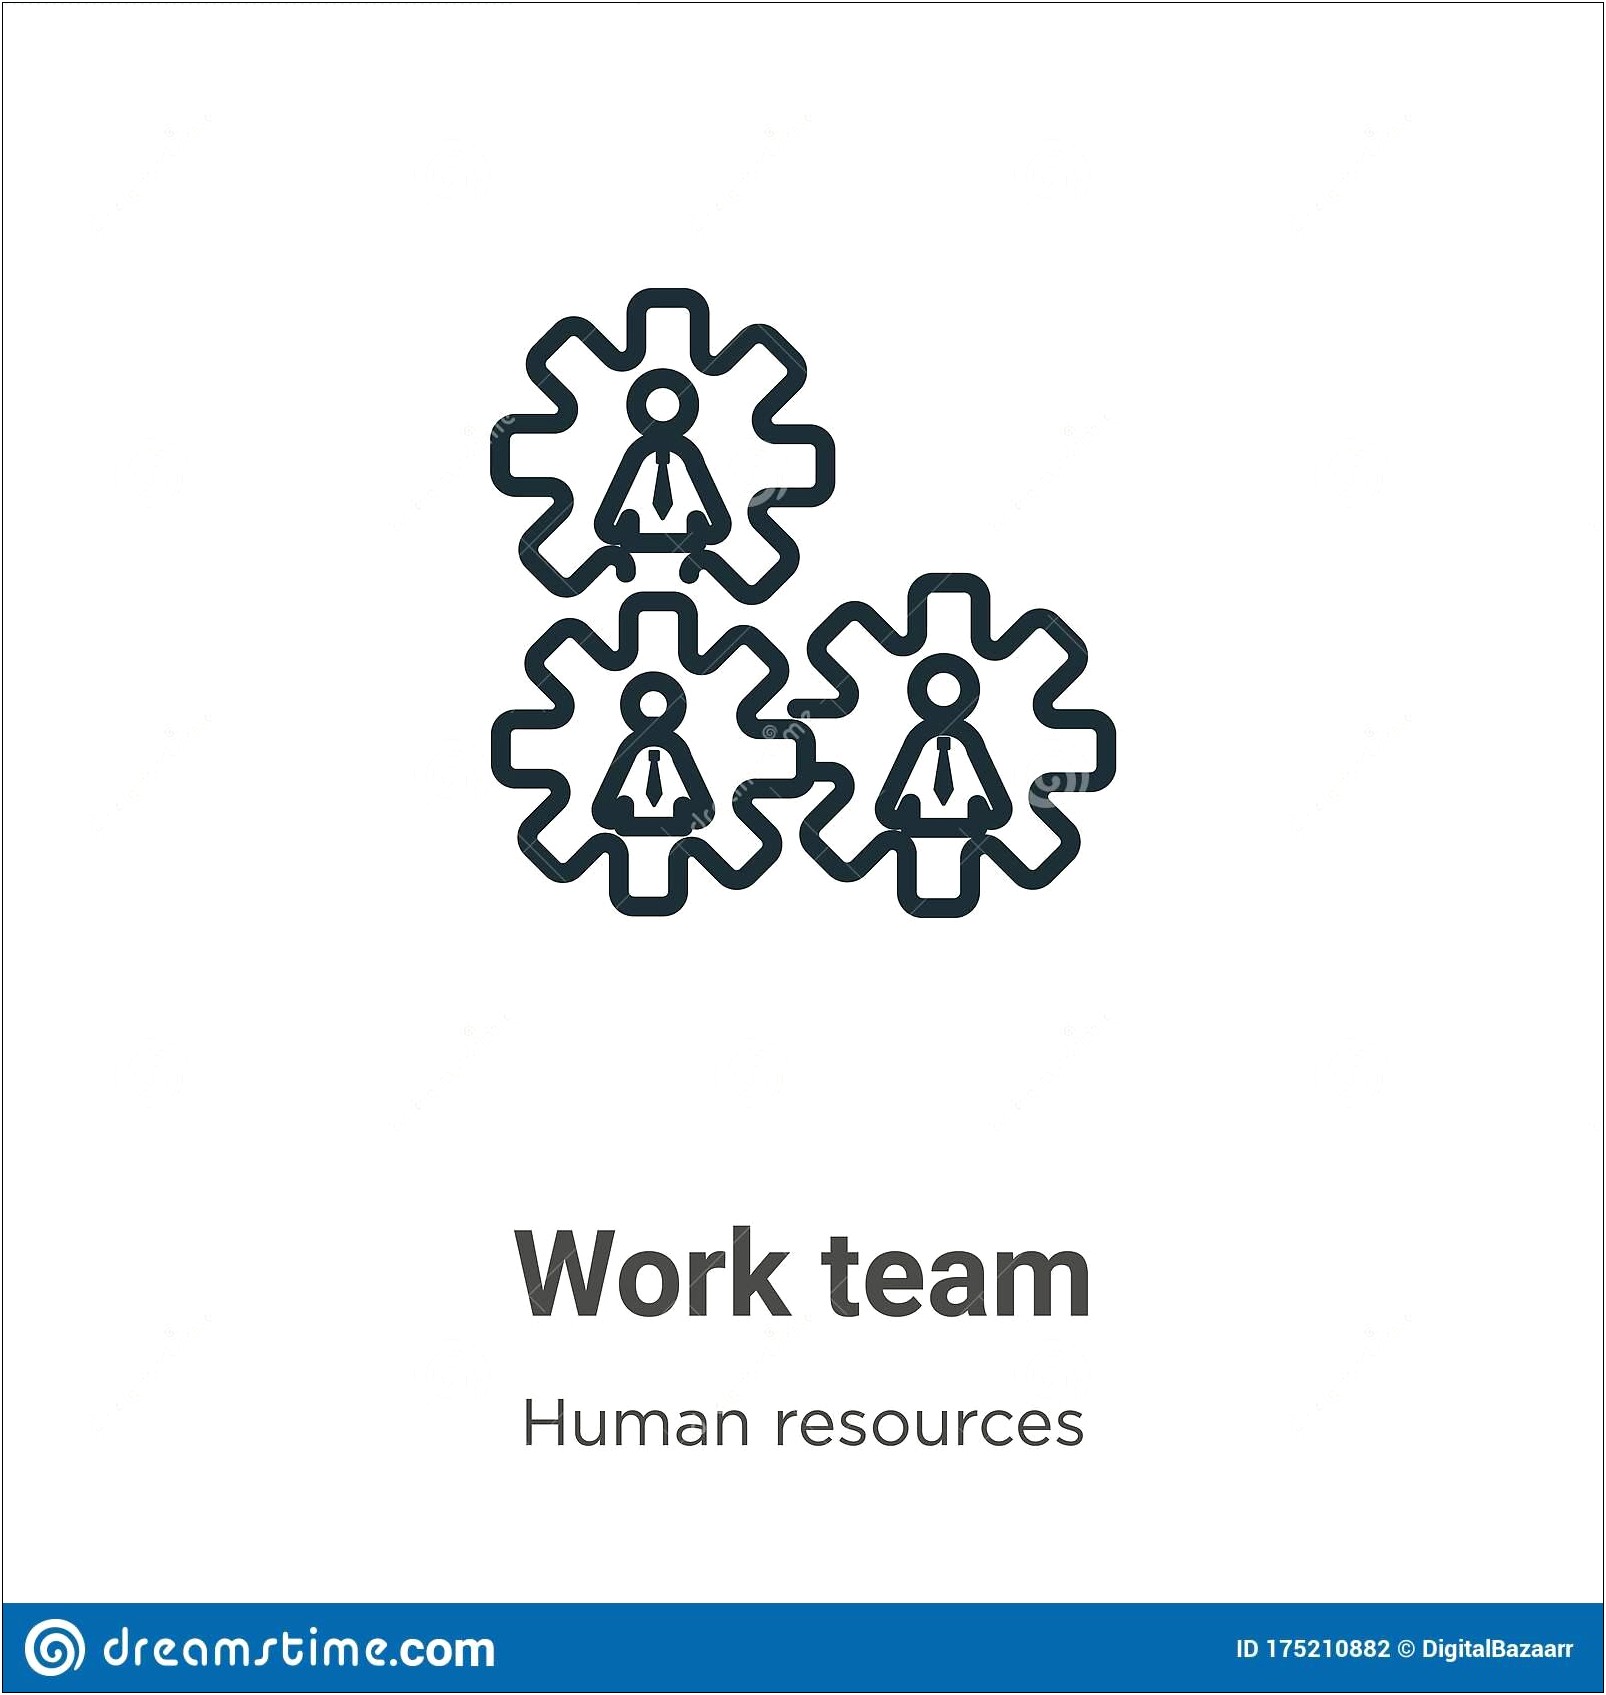 Resume Work For Working In Teams